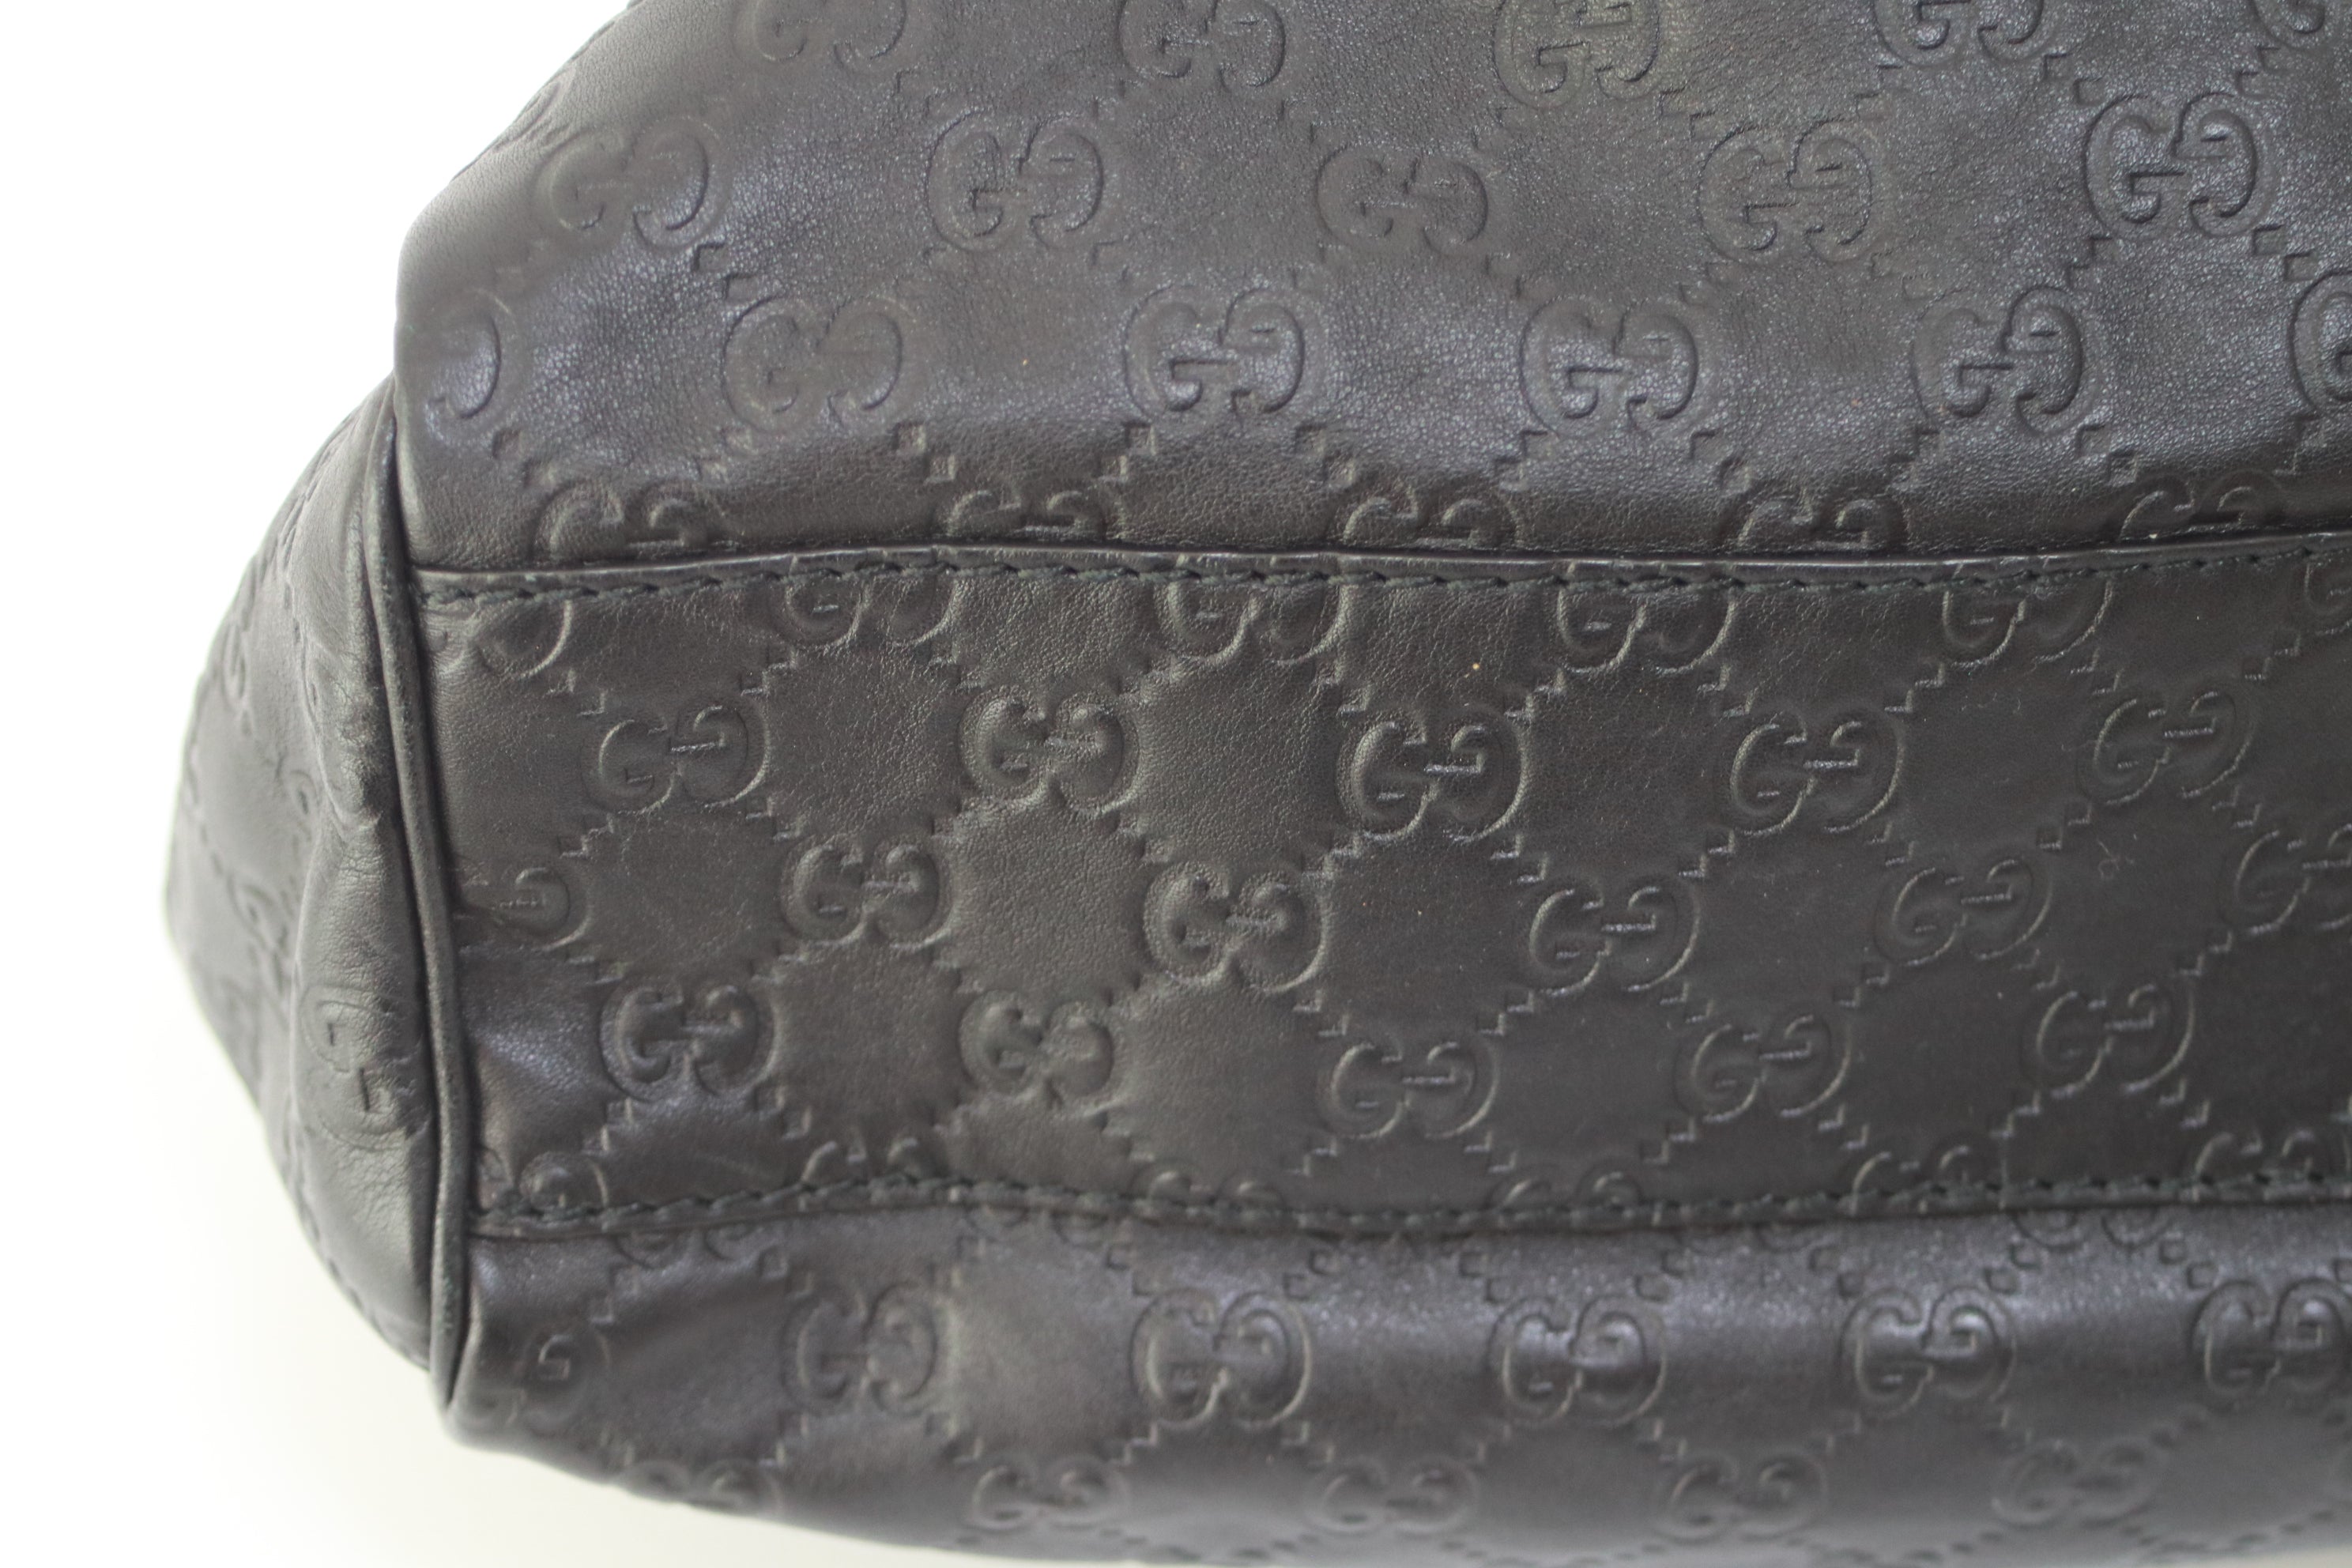 Gucci Sukey Guccisima Leather Shoulder Bag Black Used (7207)